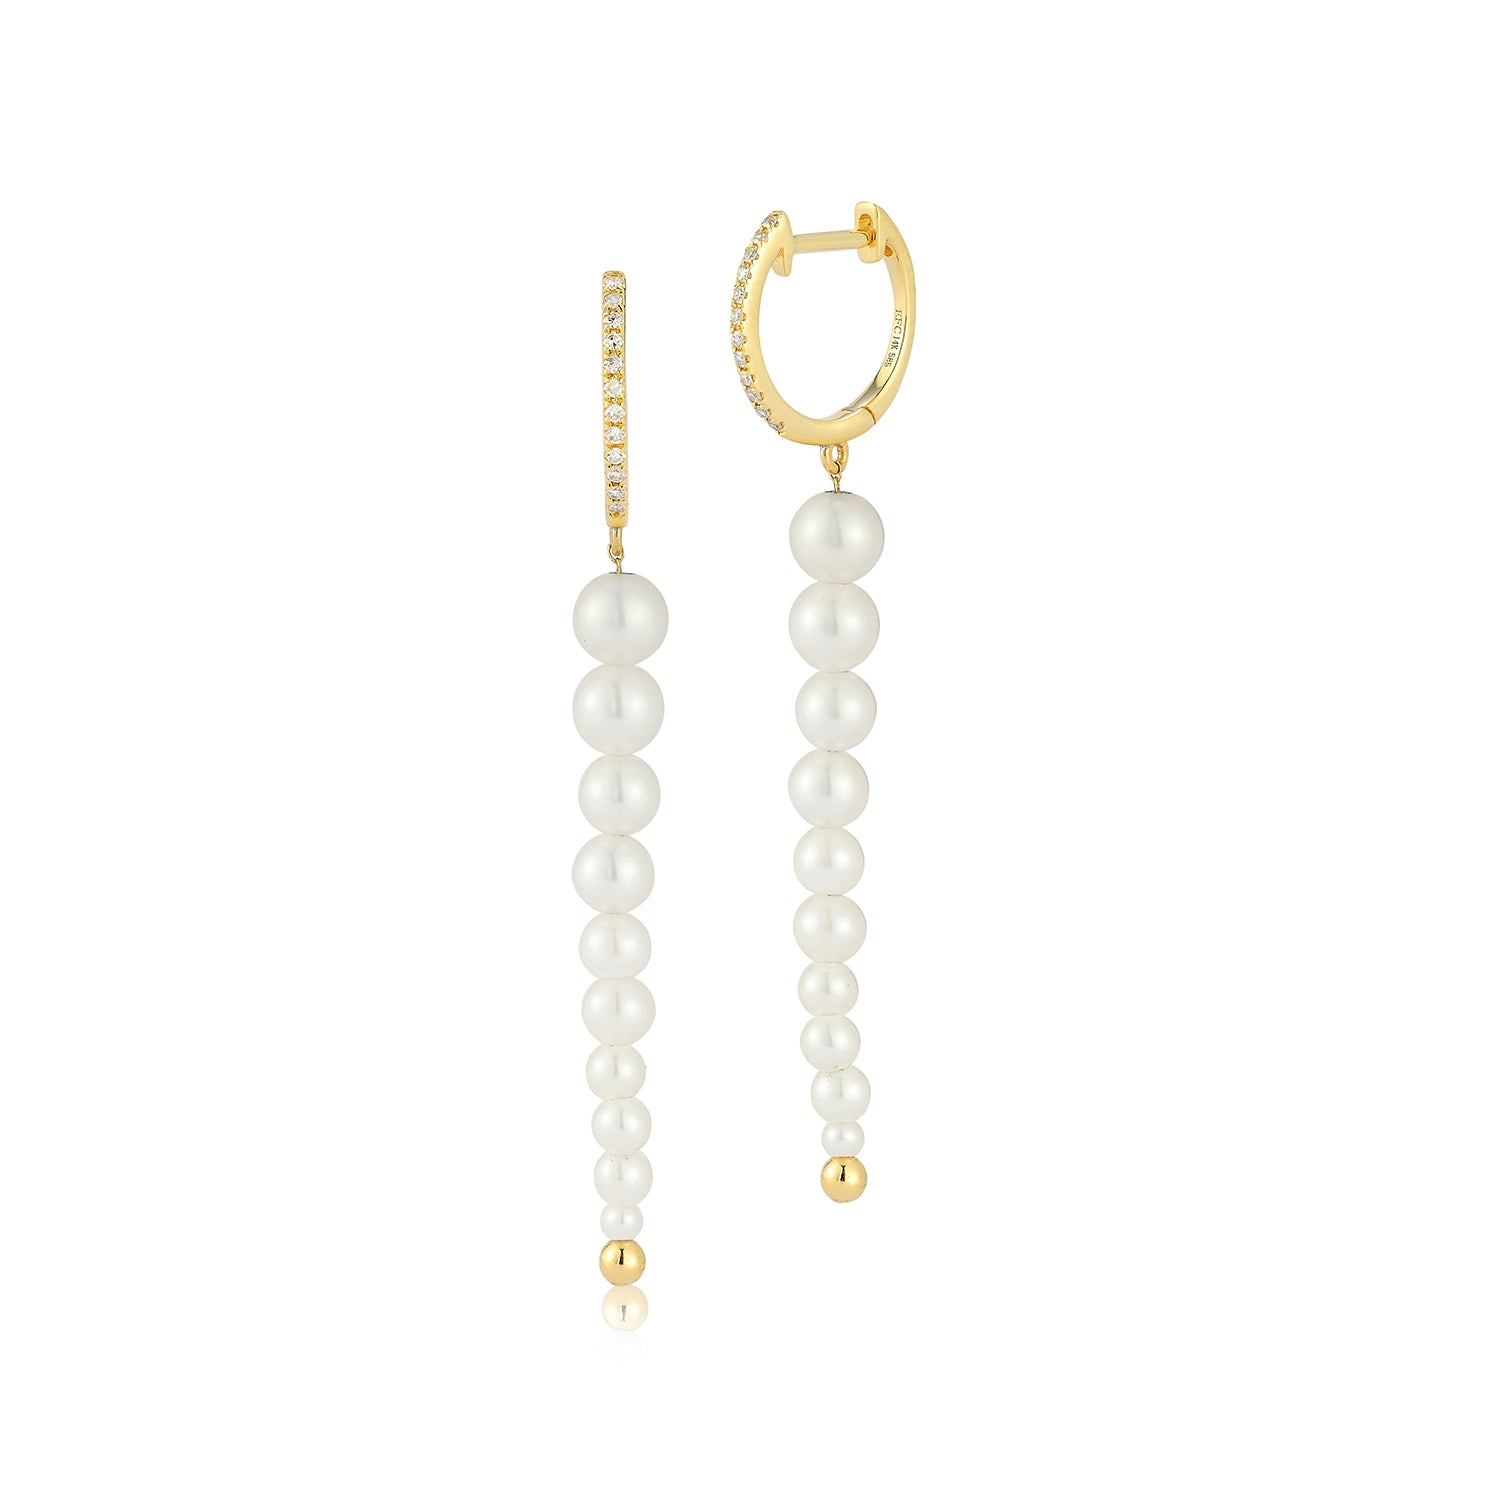 Diamond & Graduated Pearl Drop Earrings in 14k yellow gold